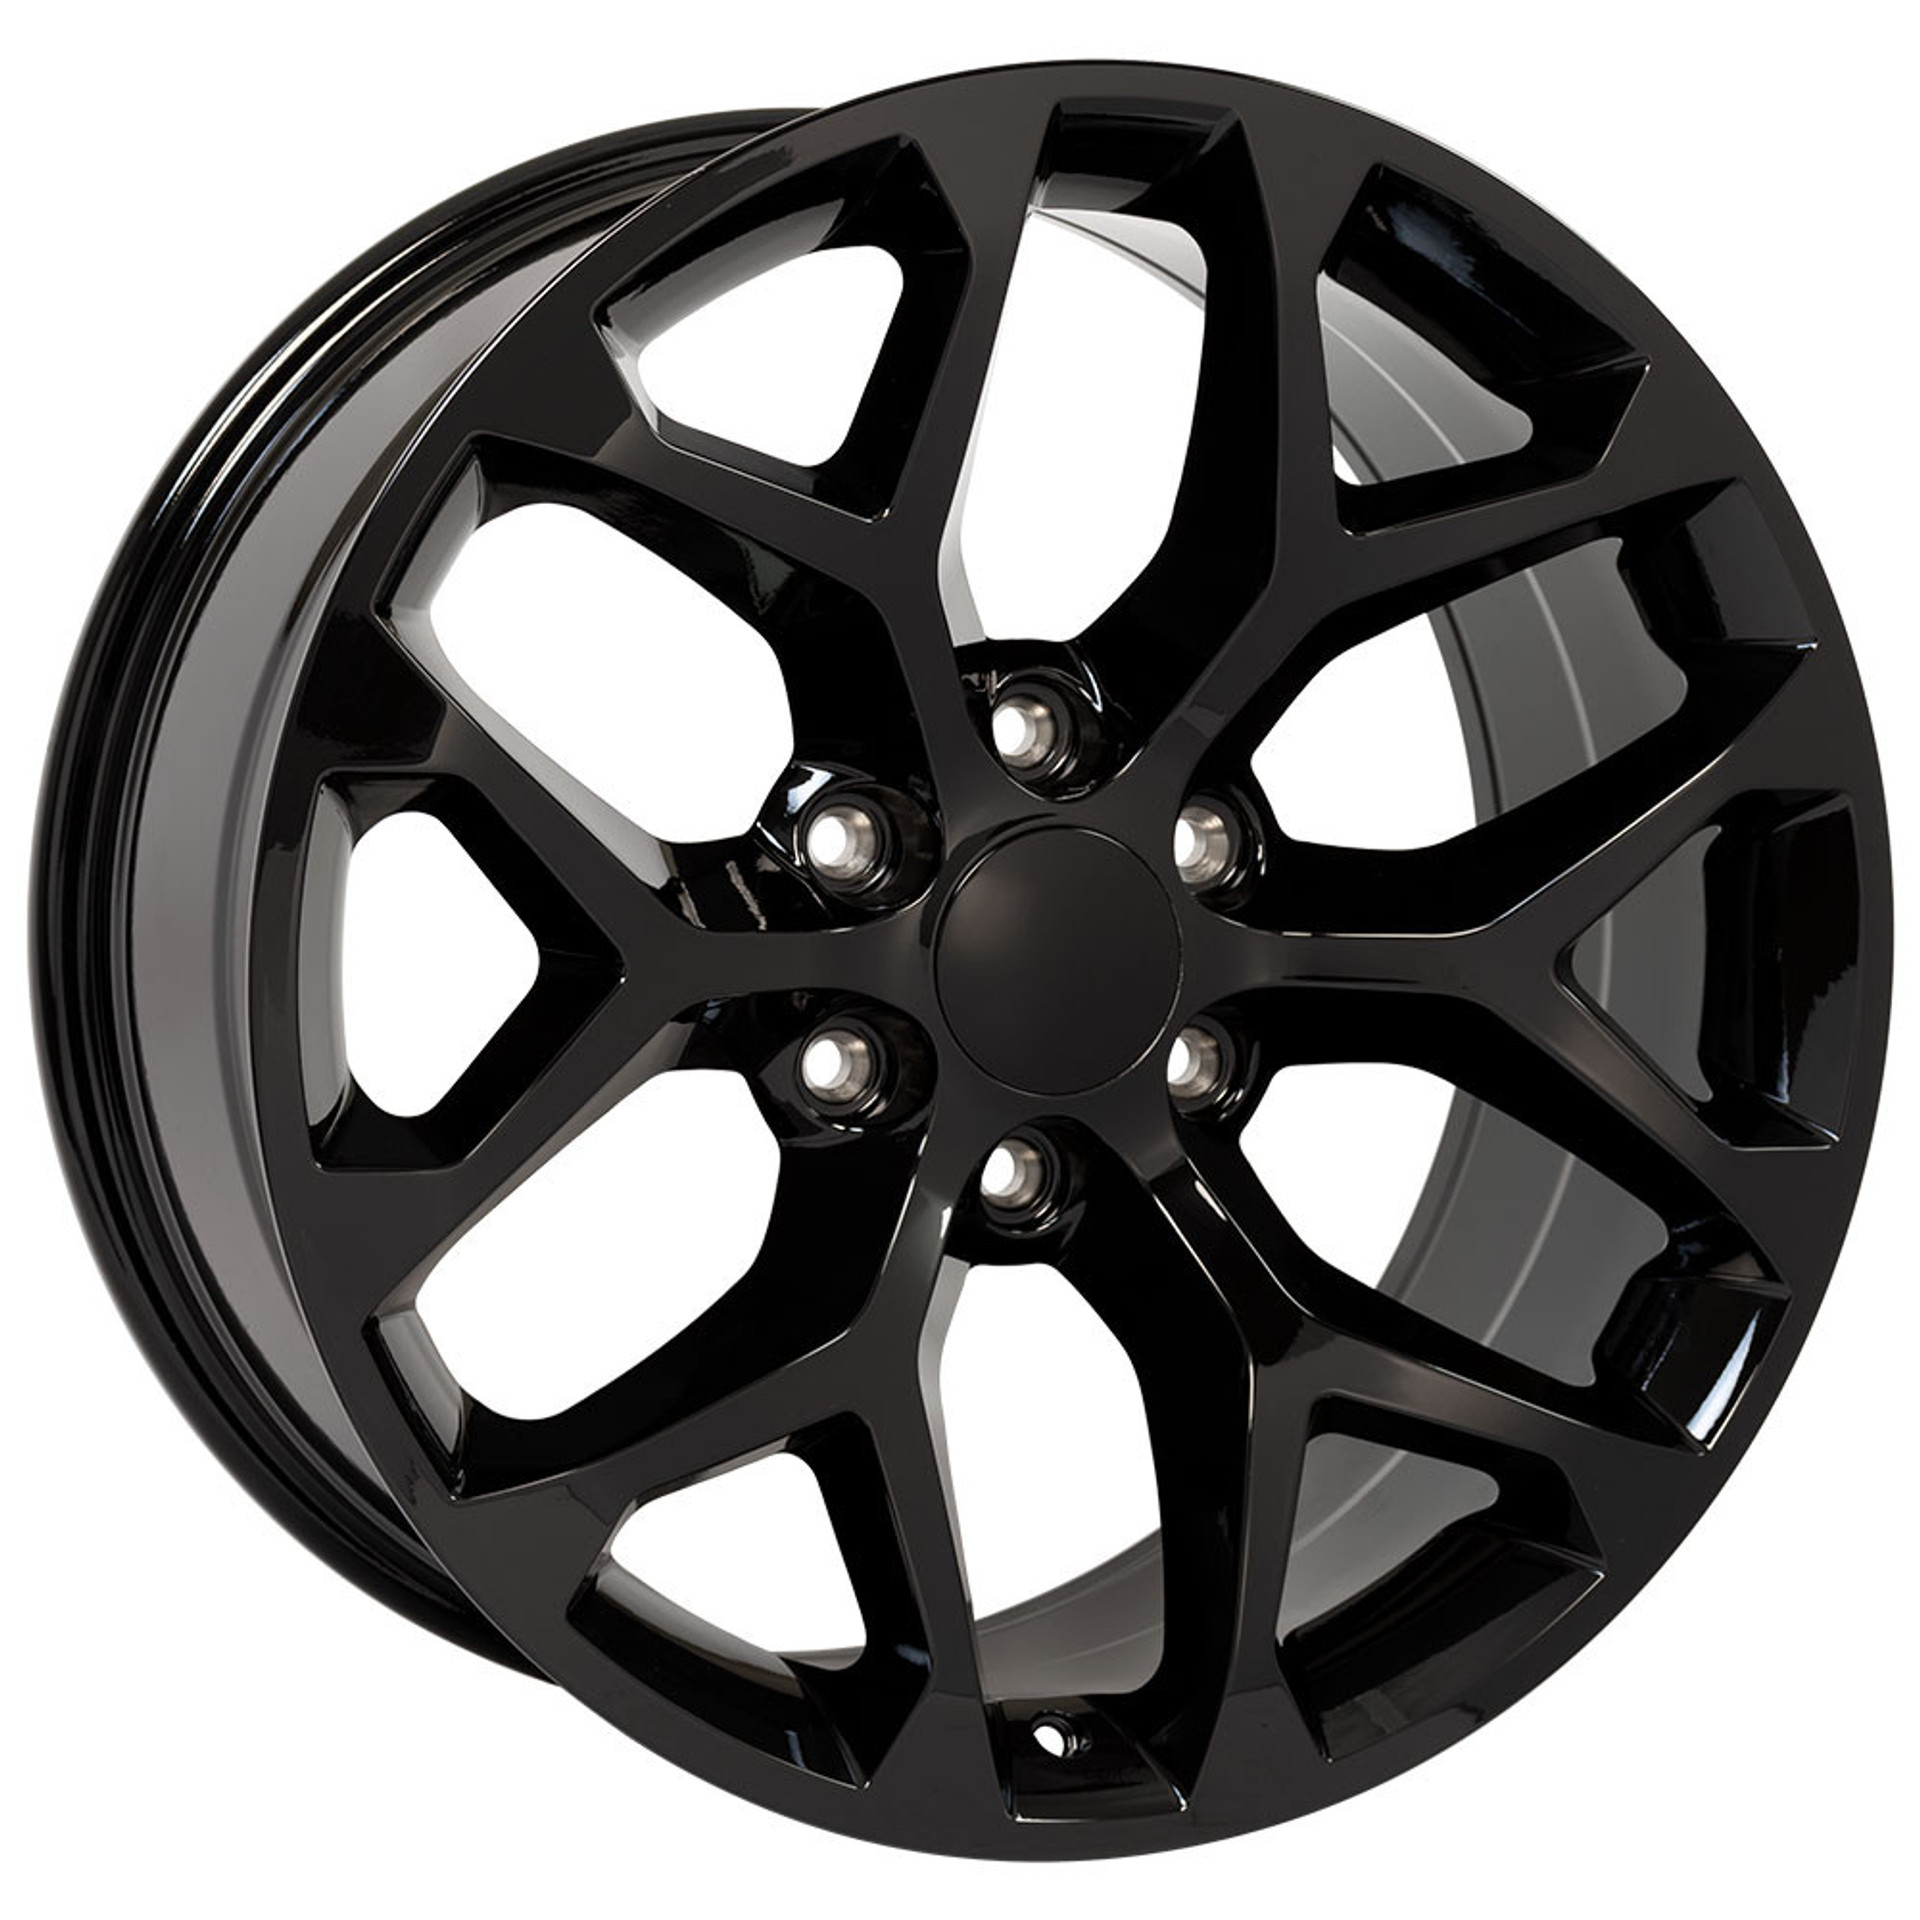 Chevy Style Gloss Black Snowflake 22 inch Wheels